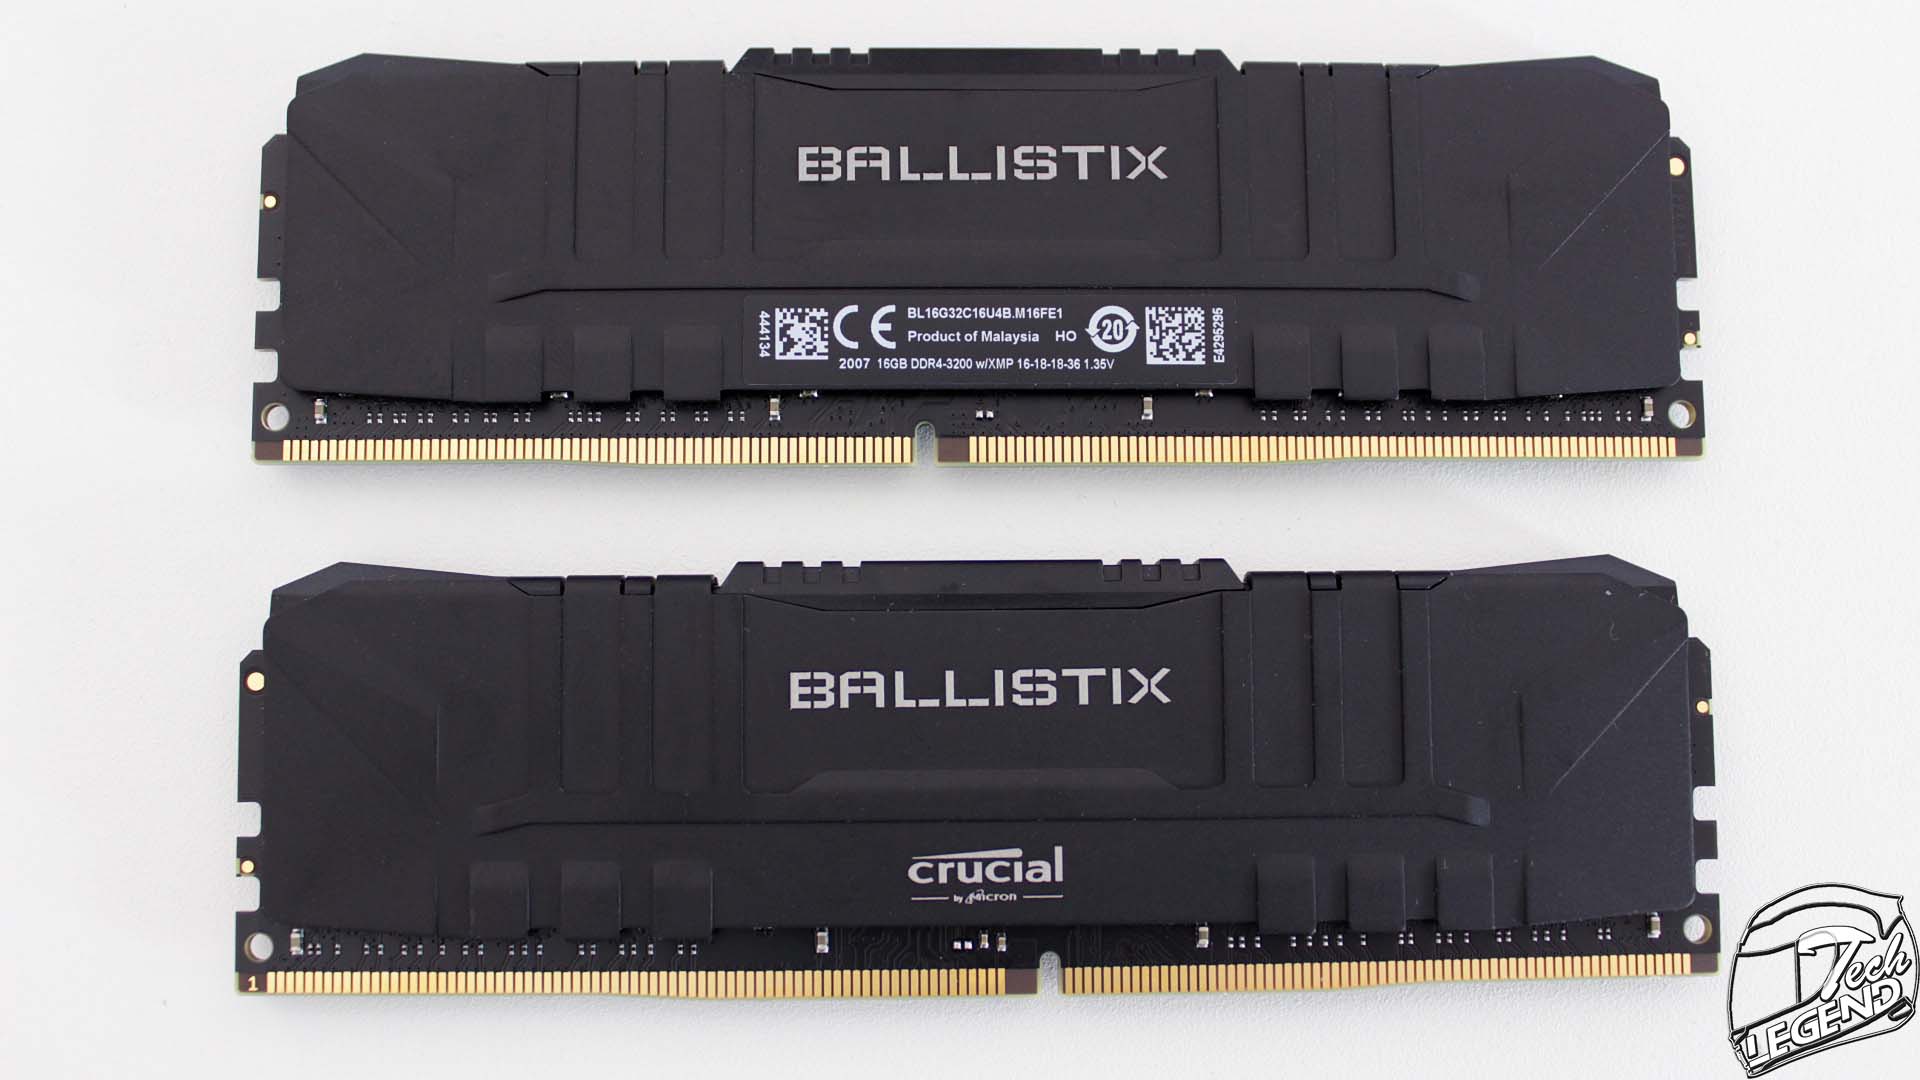 Ballistix Gaming DDR4-3200 MHz CL16 32GB - RAM Kit Review